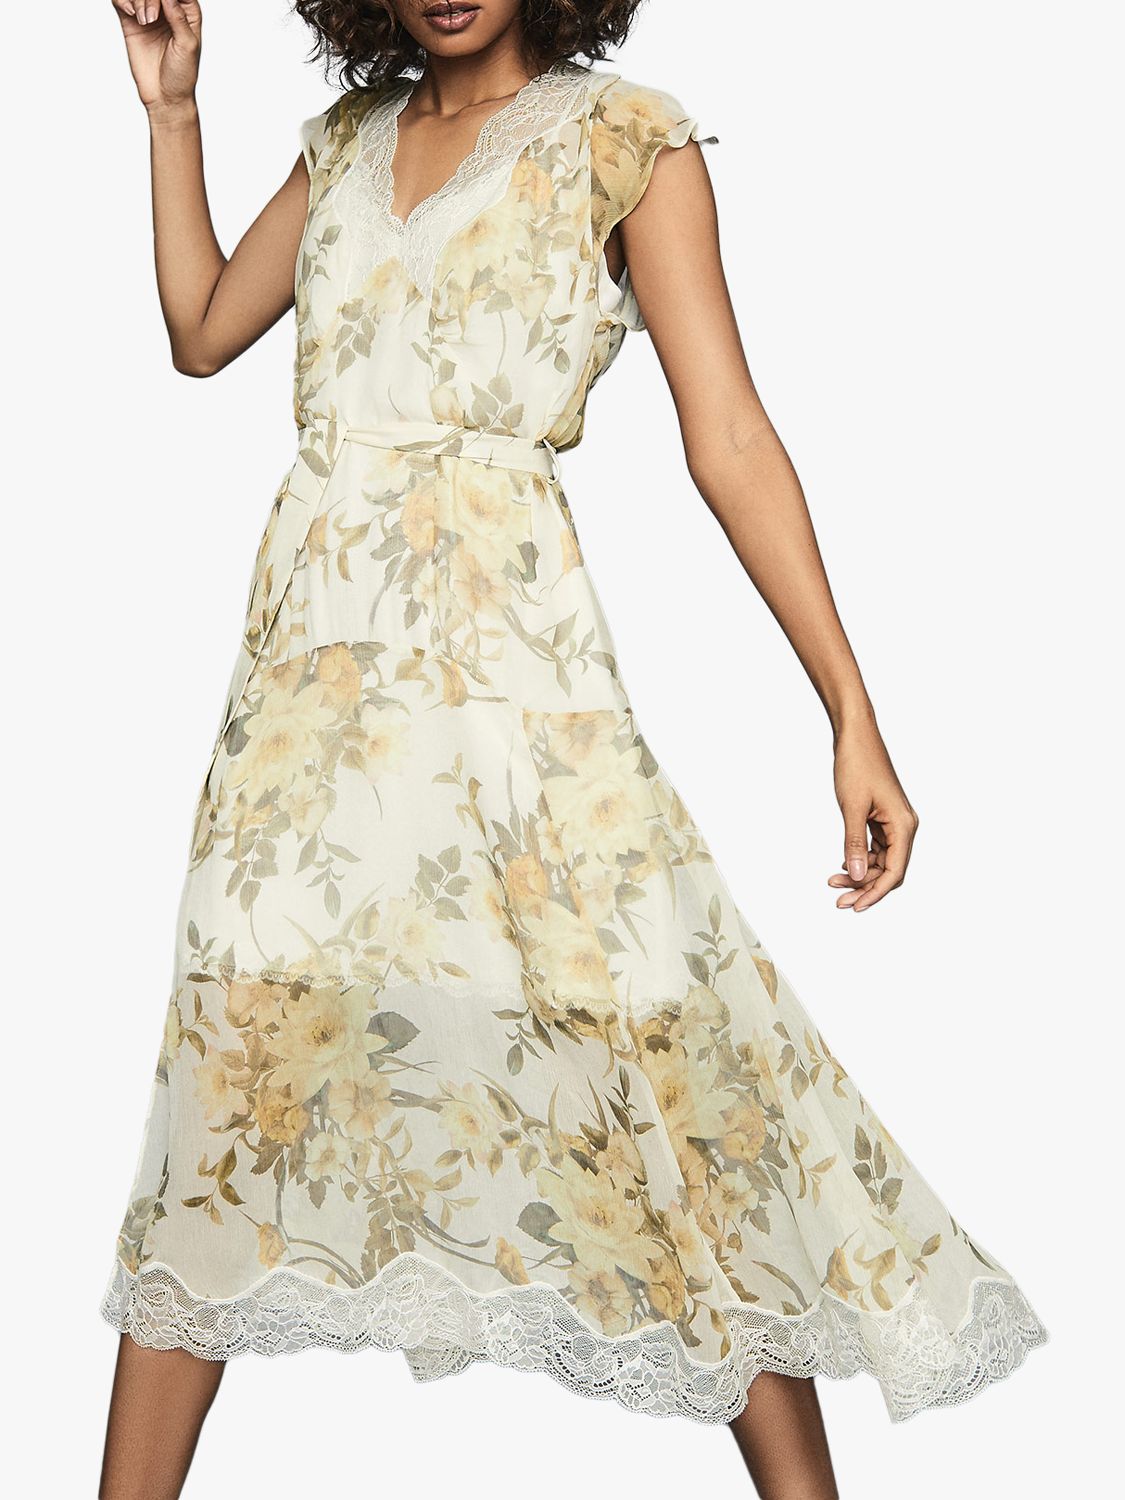 Reiss Emlin Floral Lace Trim Dress, Ivory